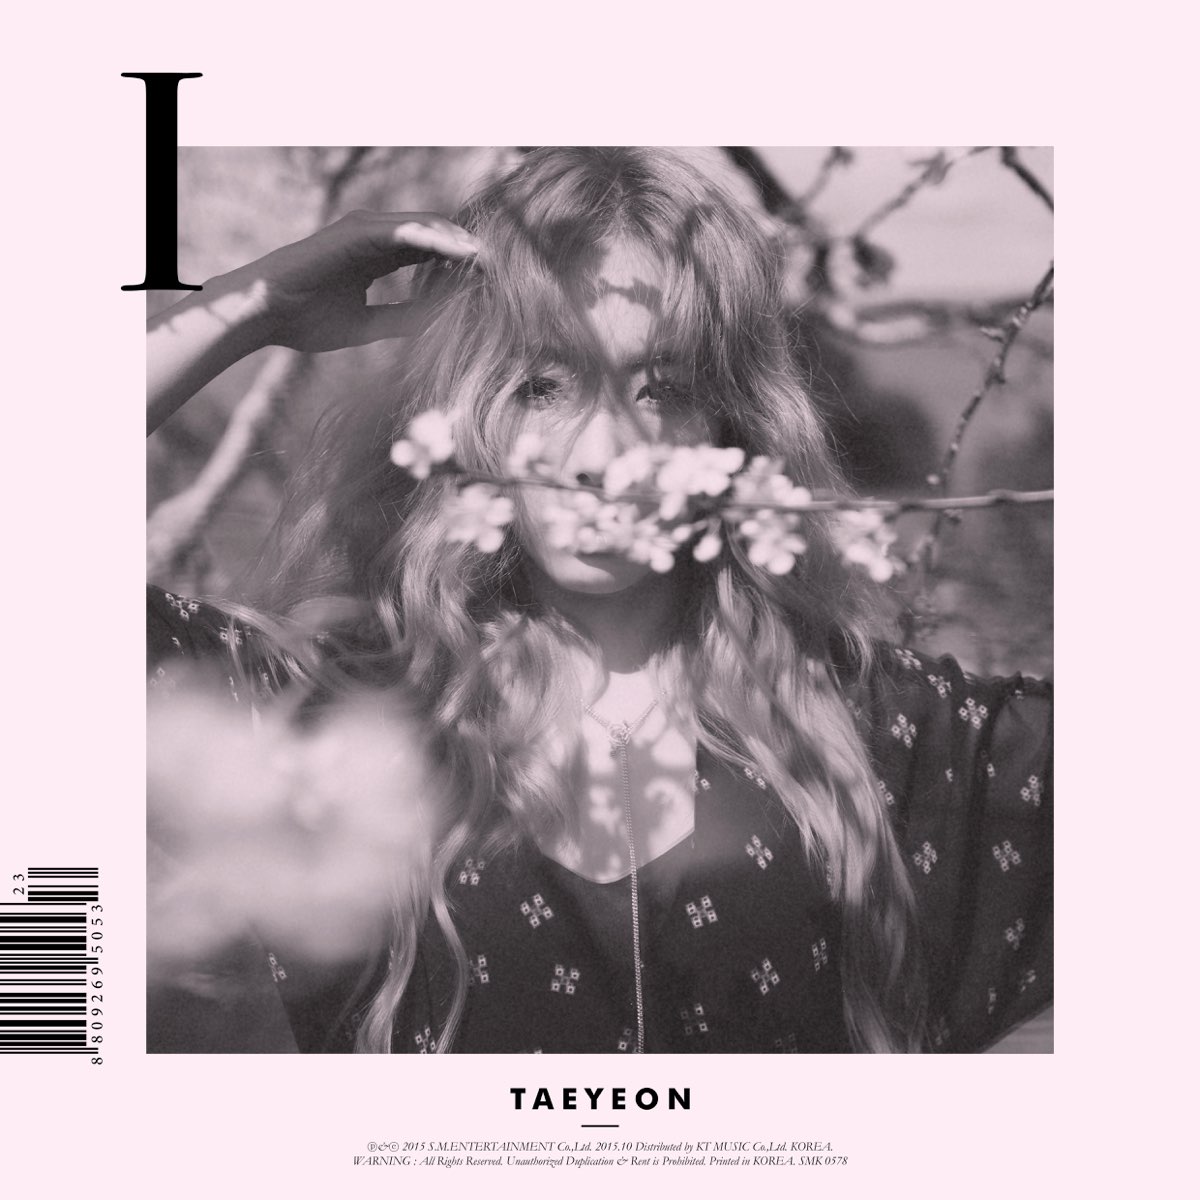 TAEYEON — Farewell cover artwork